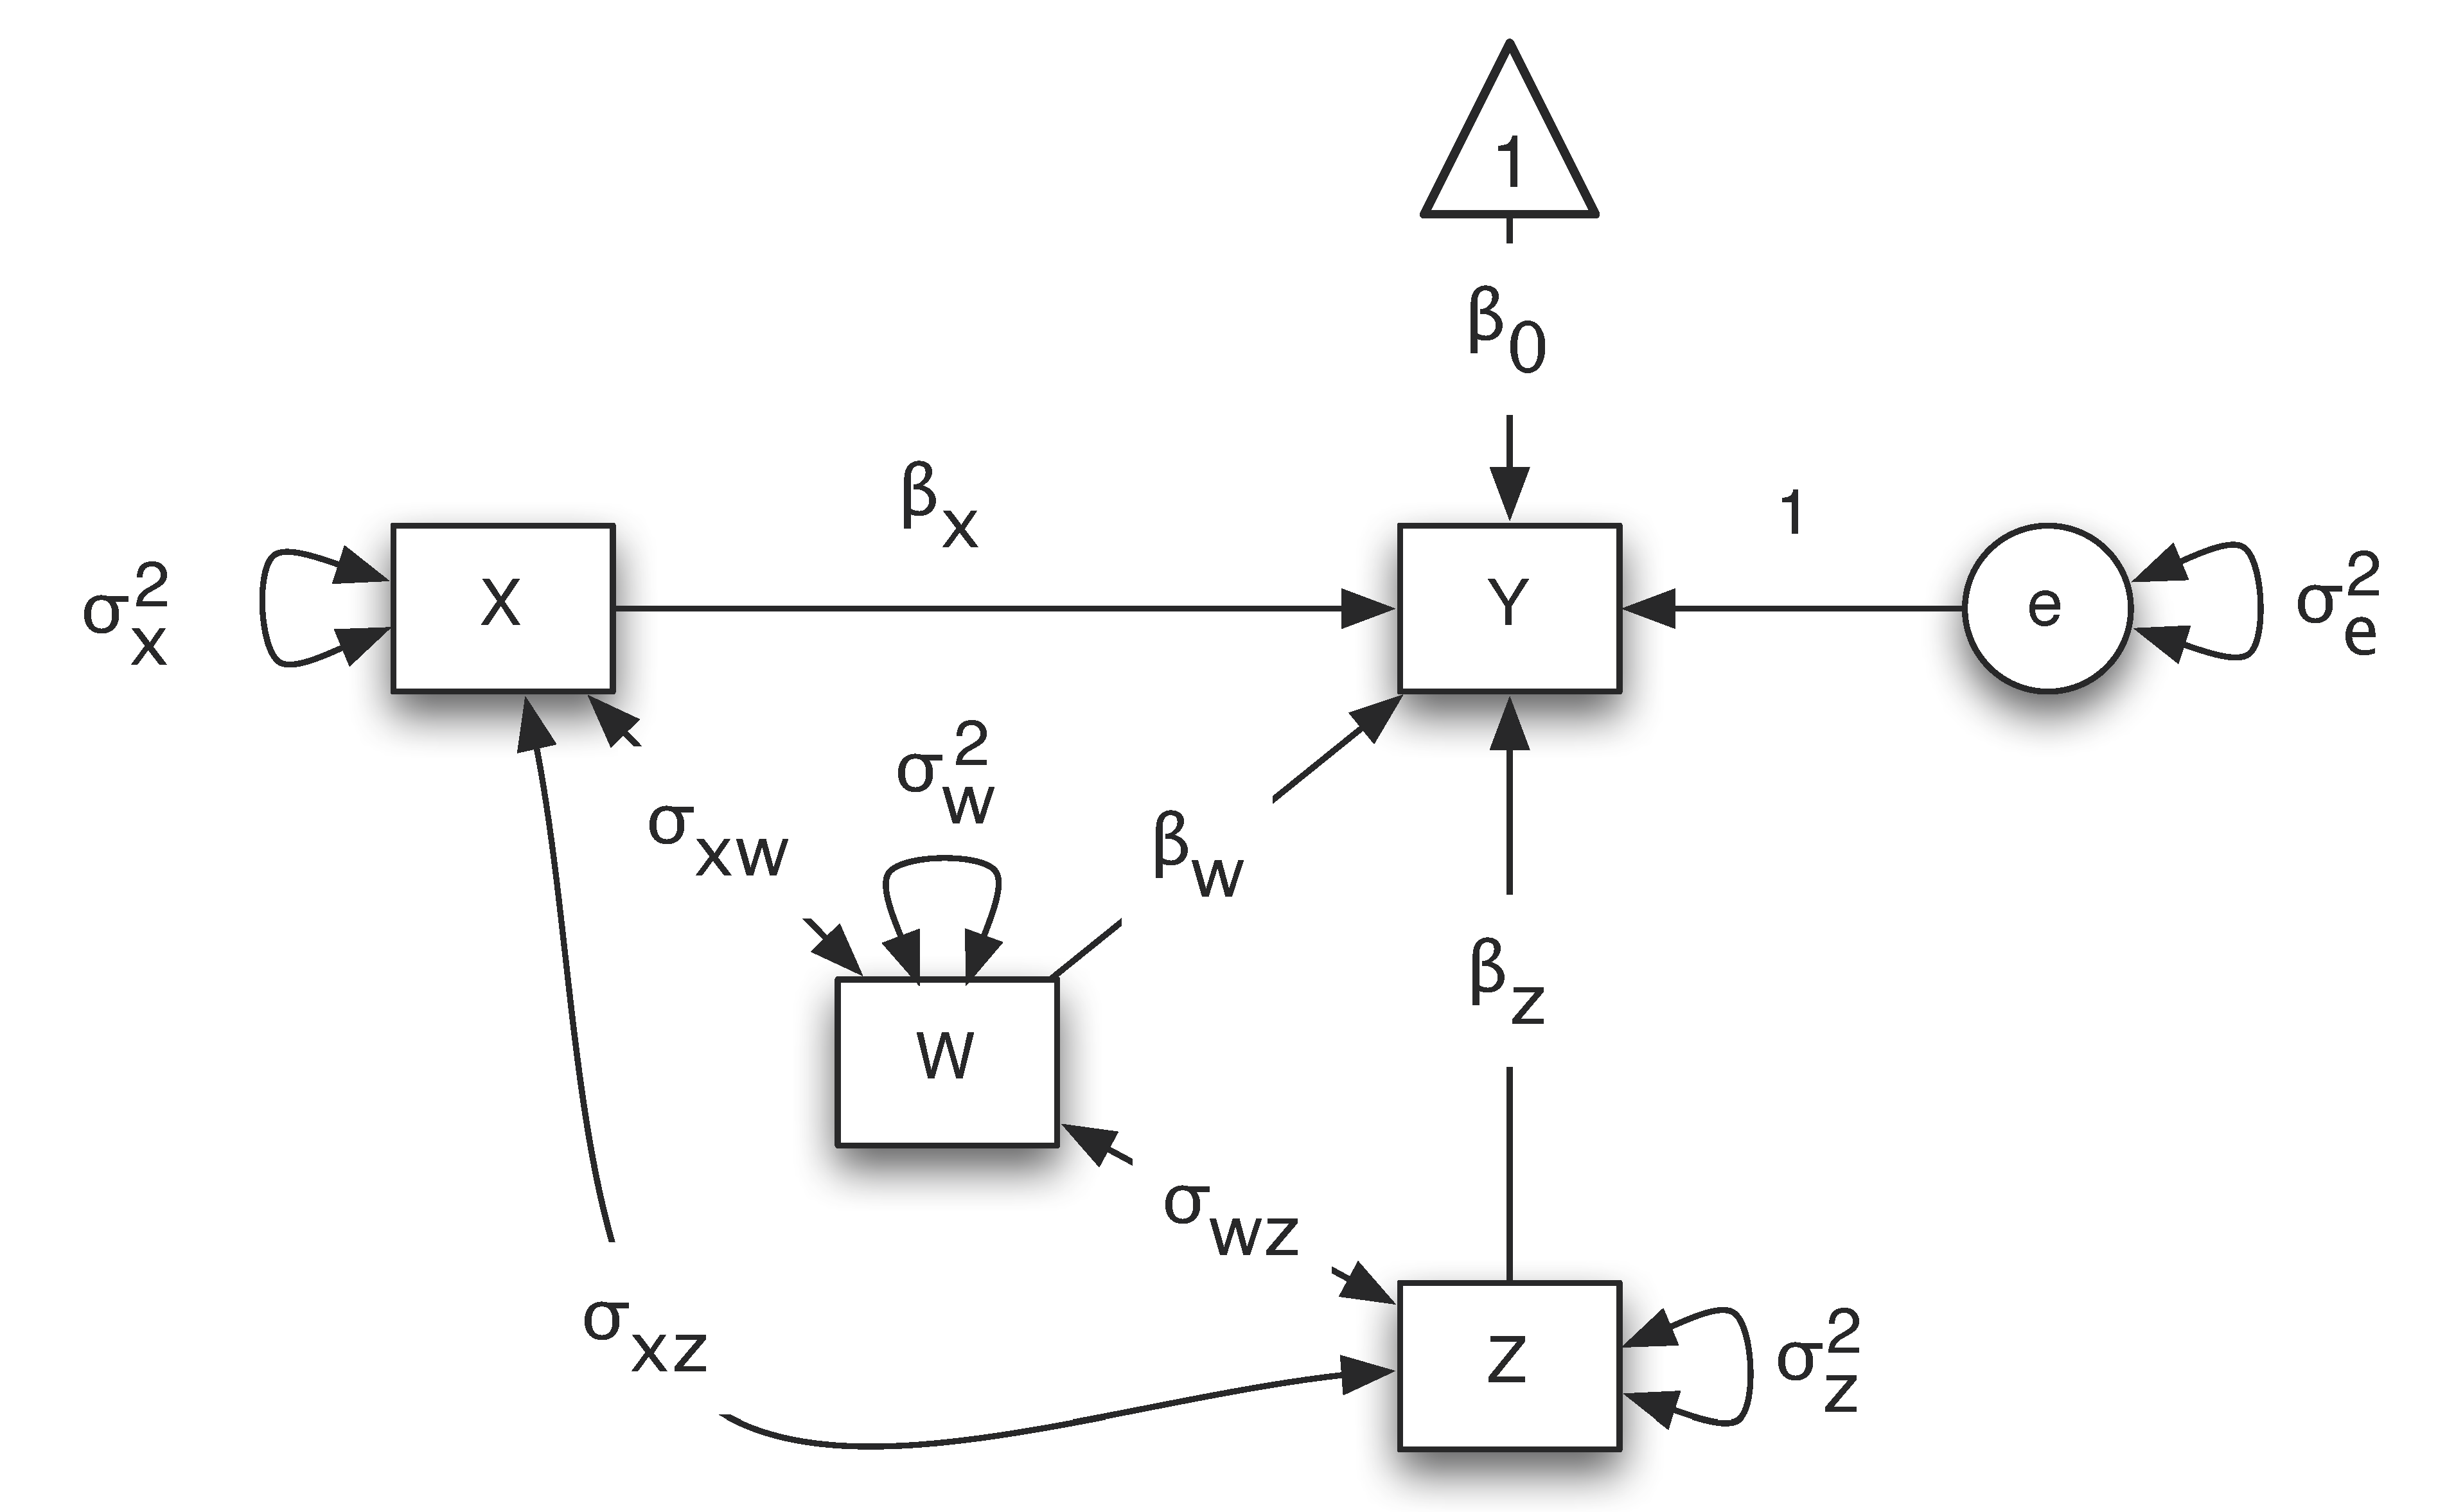 path model diagrams